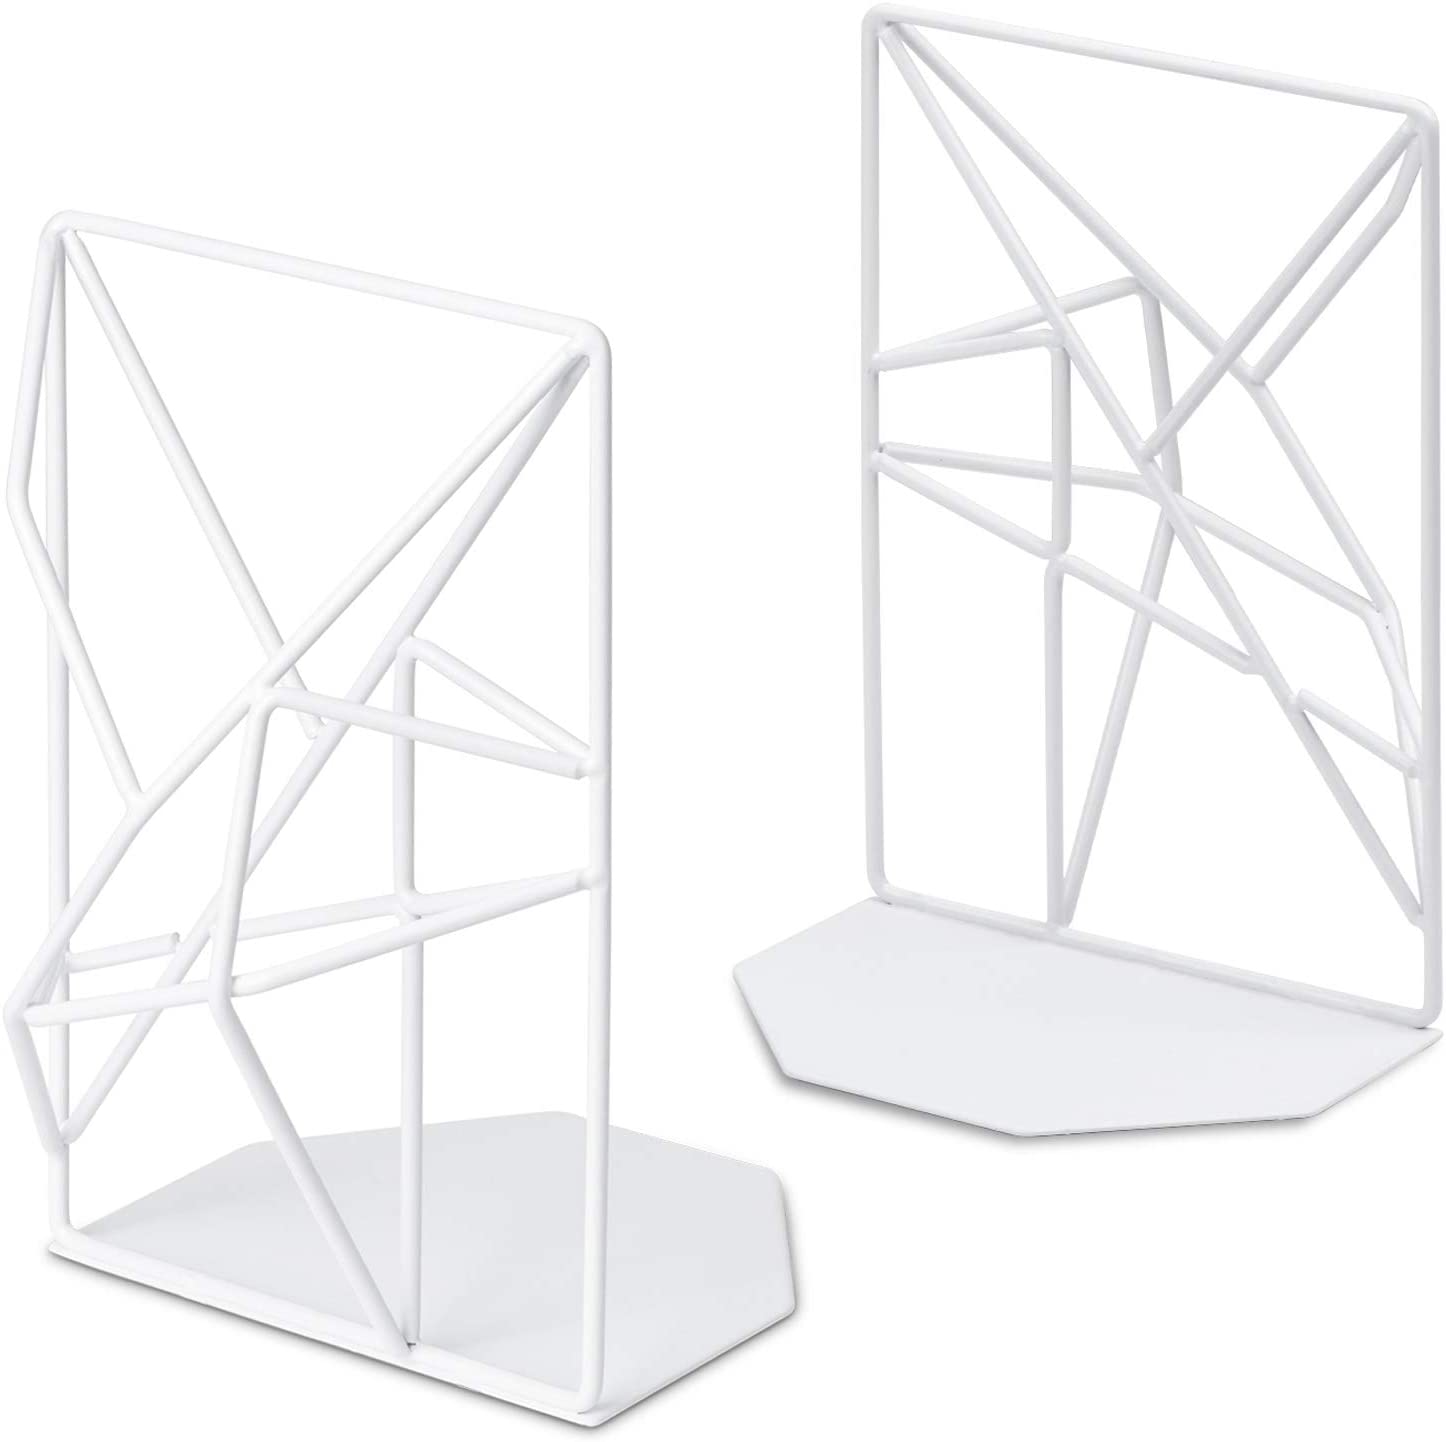 SRIWATANA Bookends White, Decorative Metal Book Ends Supports for Shelves, Unique Geometric Design(1 Pair/2 Pieces)